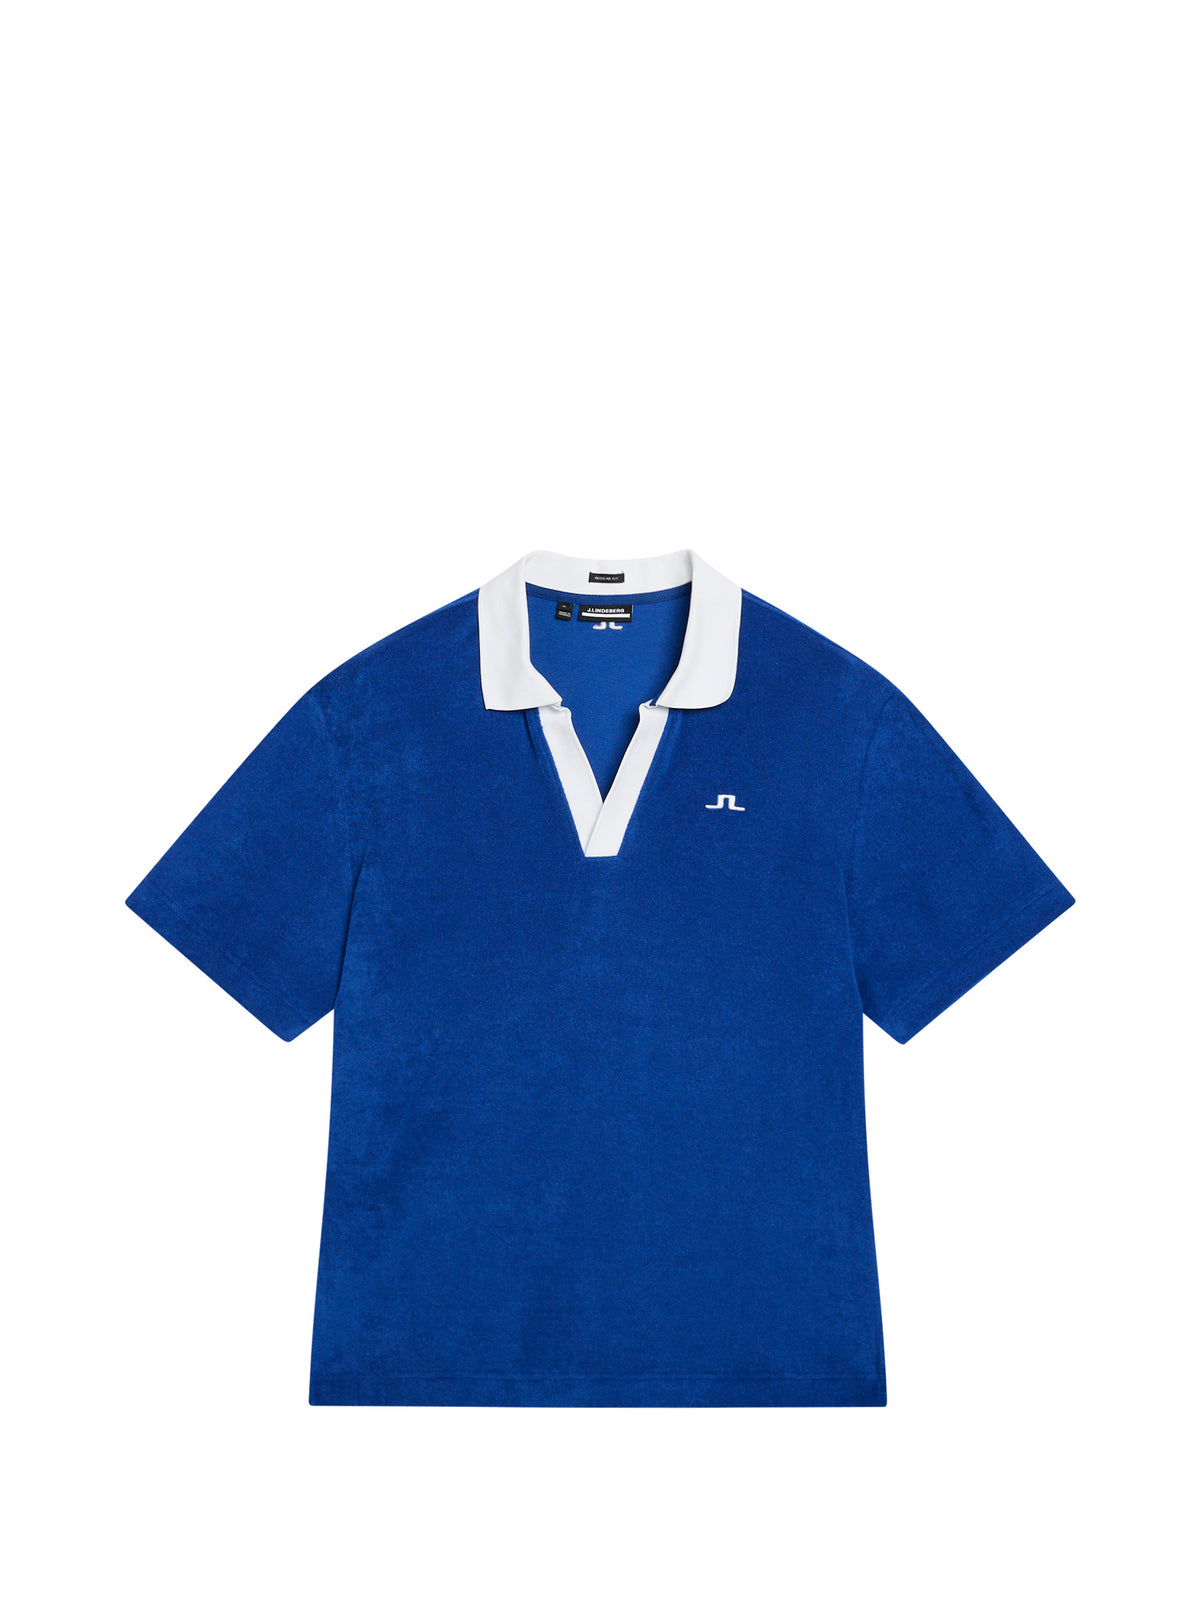 Gavin Terry Polo Shirt / Sodalite Blue